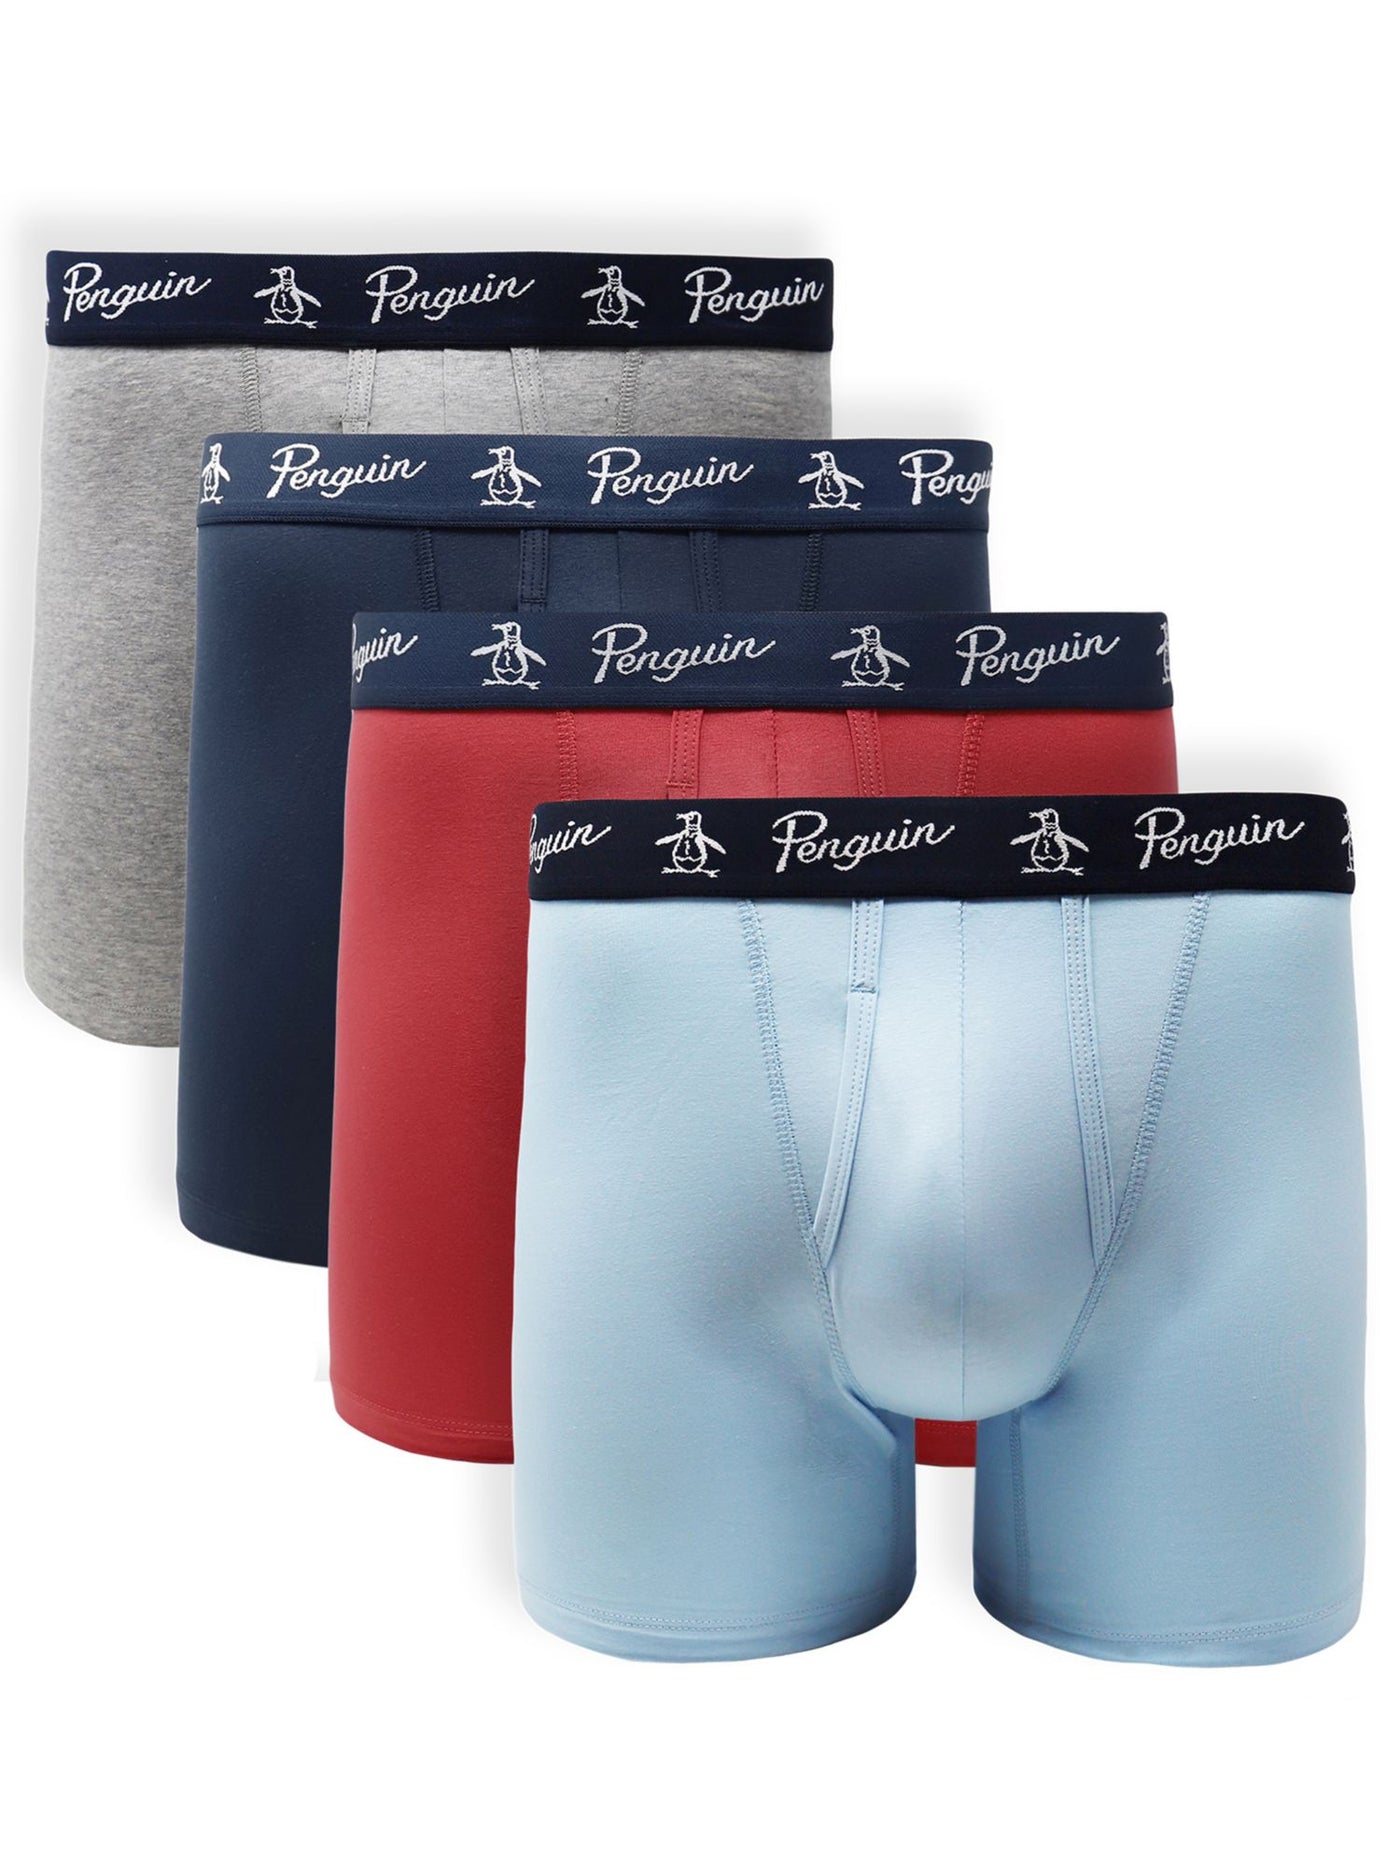 ORIGINAL PENGUIN Intimates 4 Pack Light Blue Tagless Boxer Brief Underwear XL